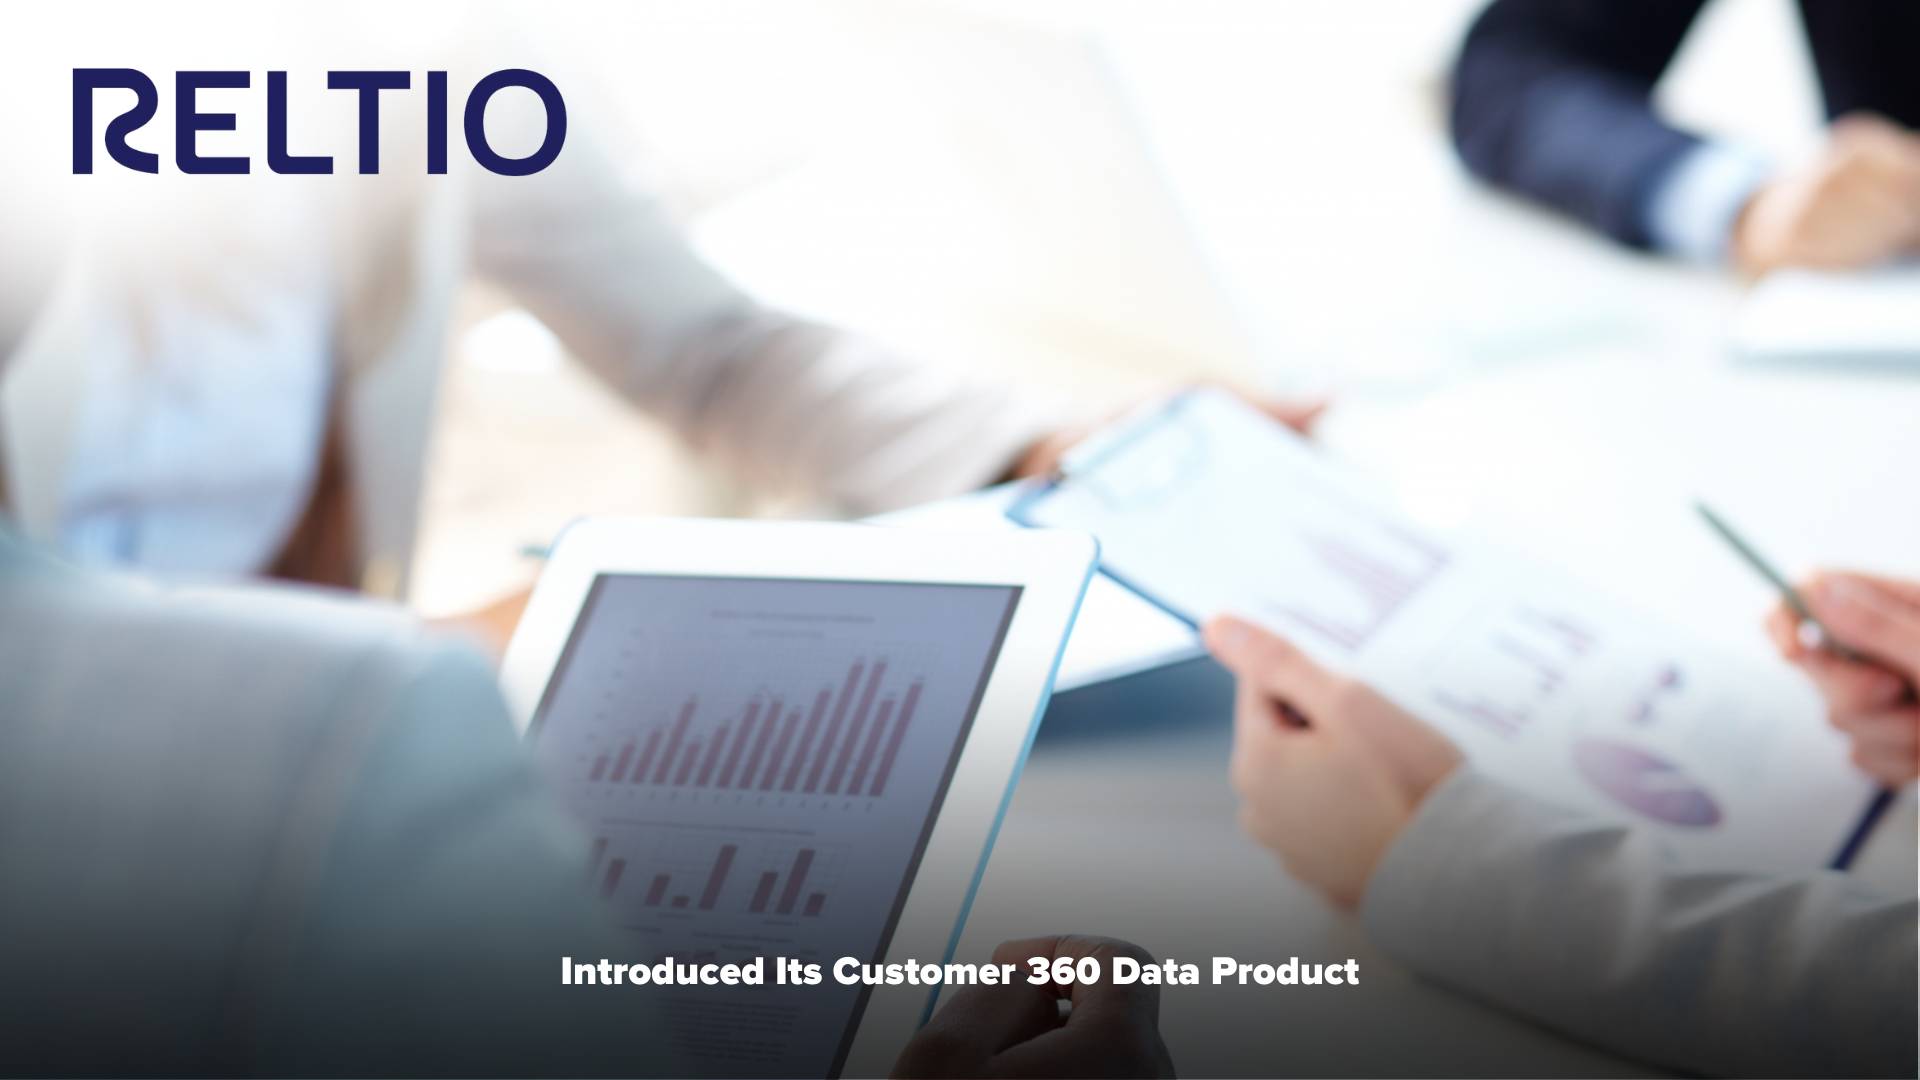 Reltio Customer 360 Data Product Pioneers New Era of AI-powered Data Unification